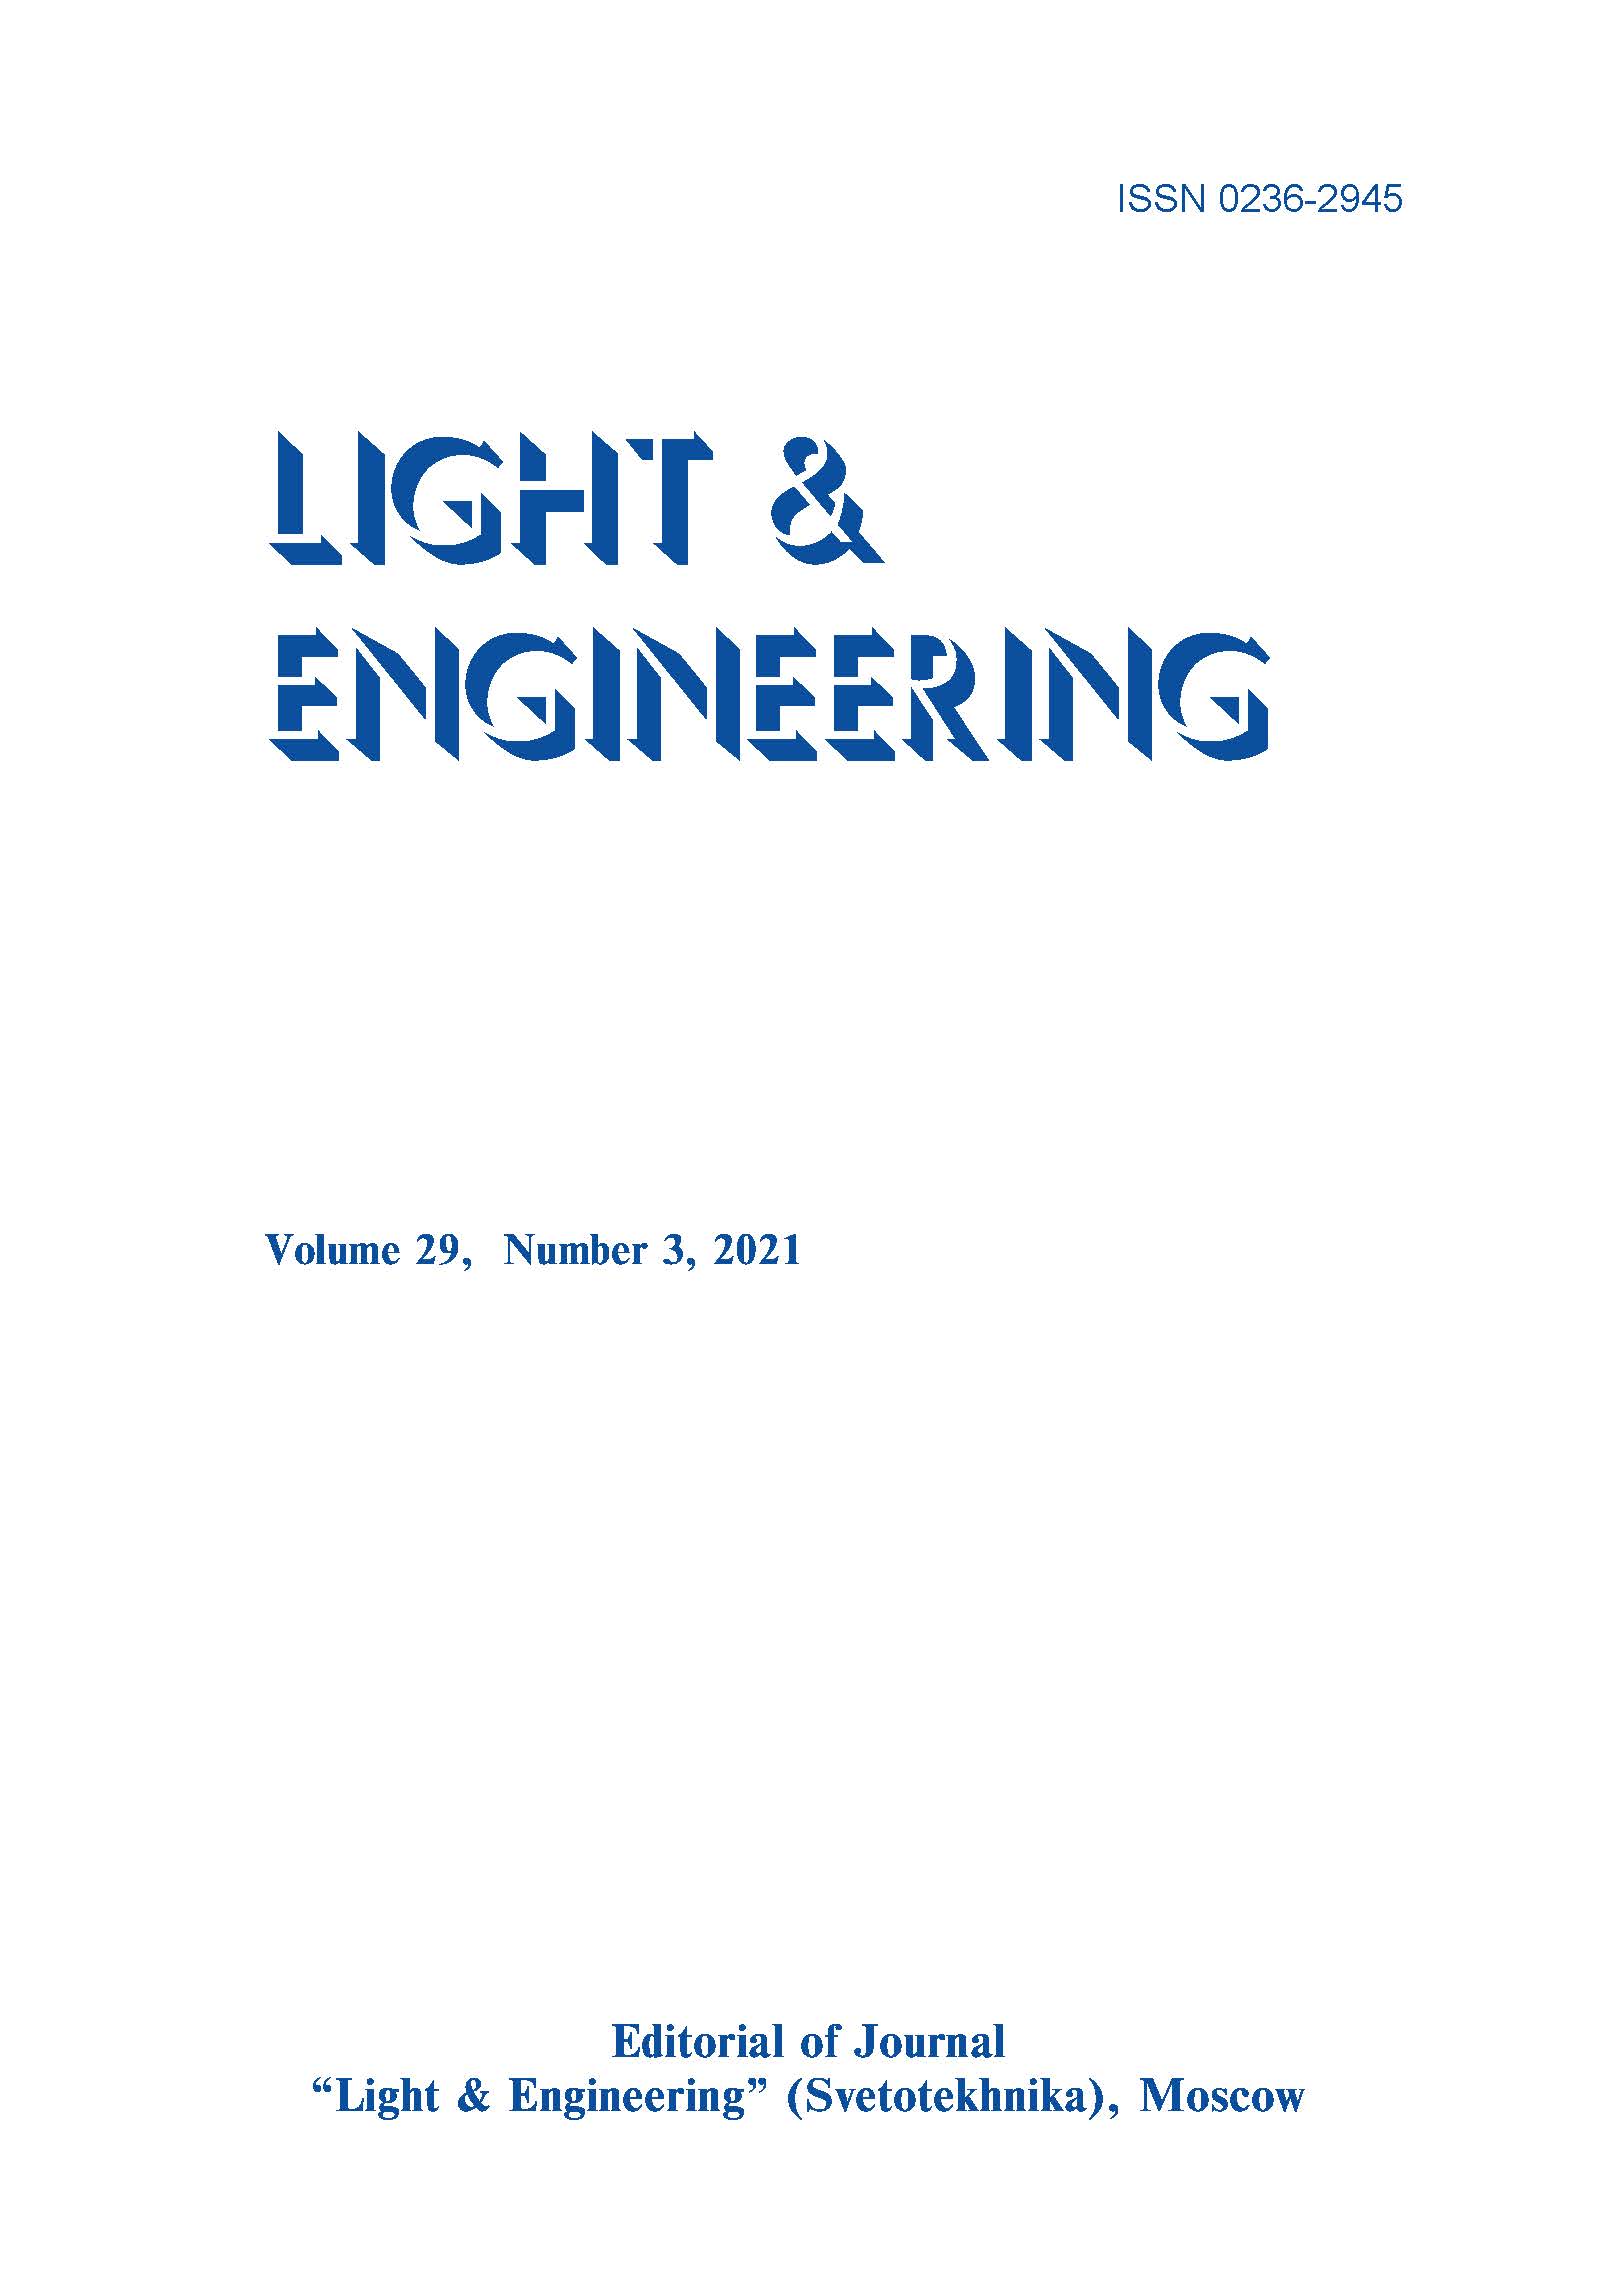 Economic Efficiency Of Implementation Of Lighting control In Public Buildings L&E, Vol. 29, No. 3, 2021